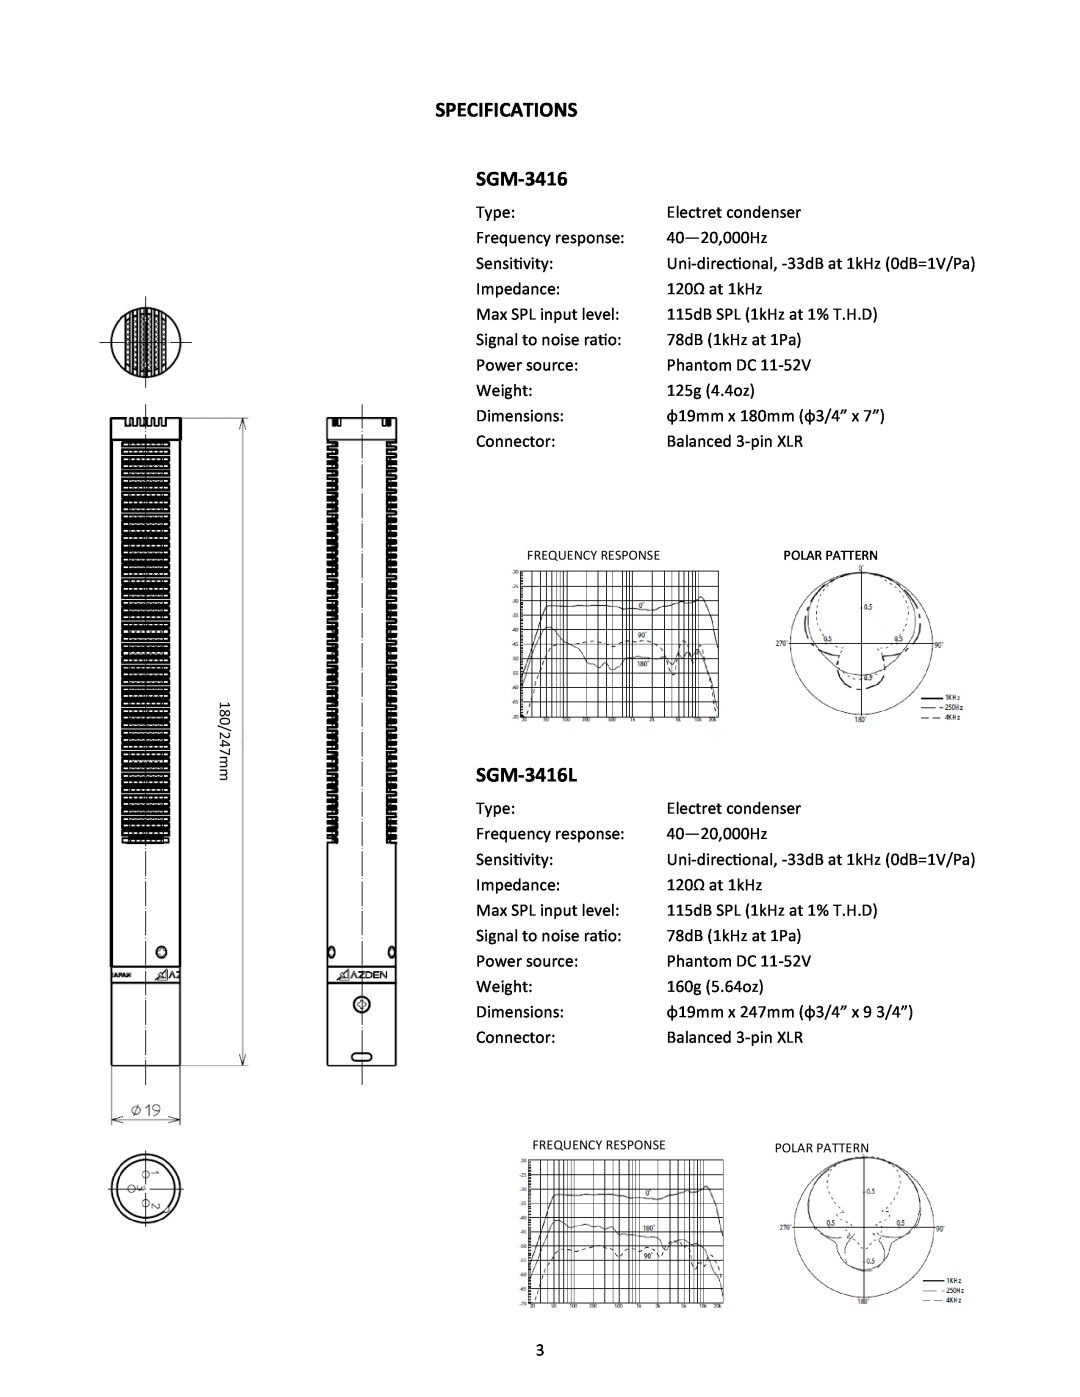 Azden SGM3416L manual SPECIFICATIONS SGM-3416, SGM-3416L, 180/247mm 